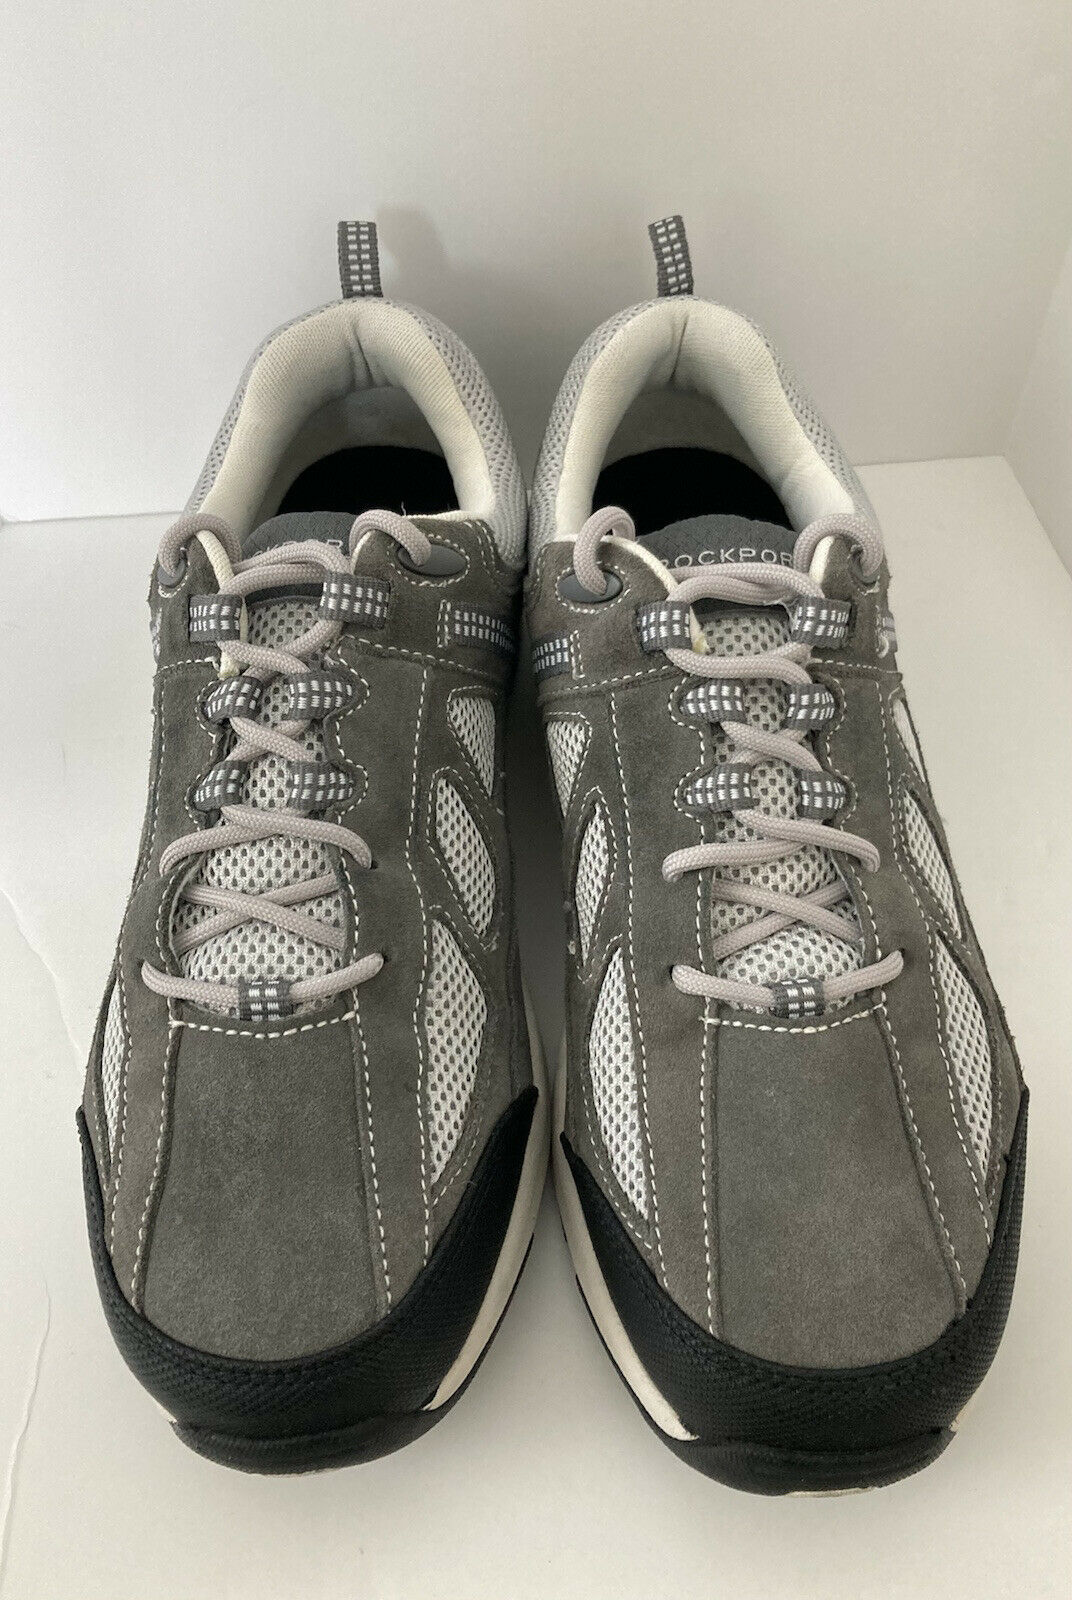 Rockport Adiprene By Adidas Men’s Walking Shoes US Size 10.5